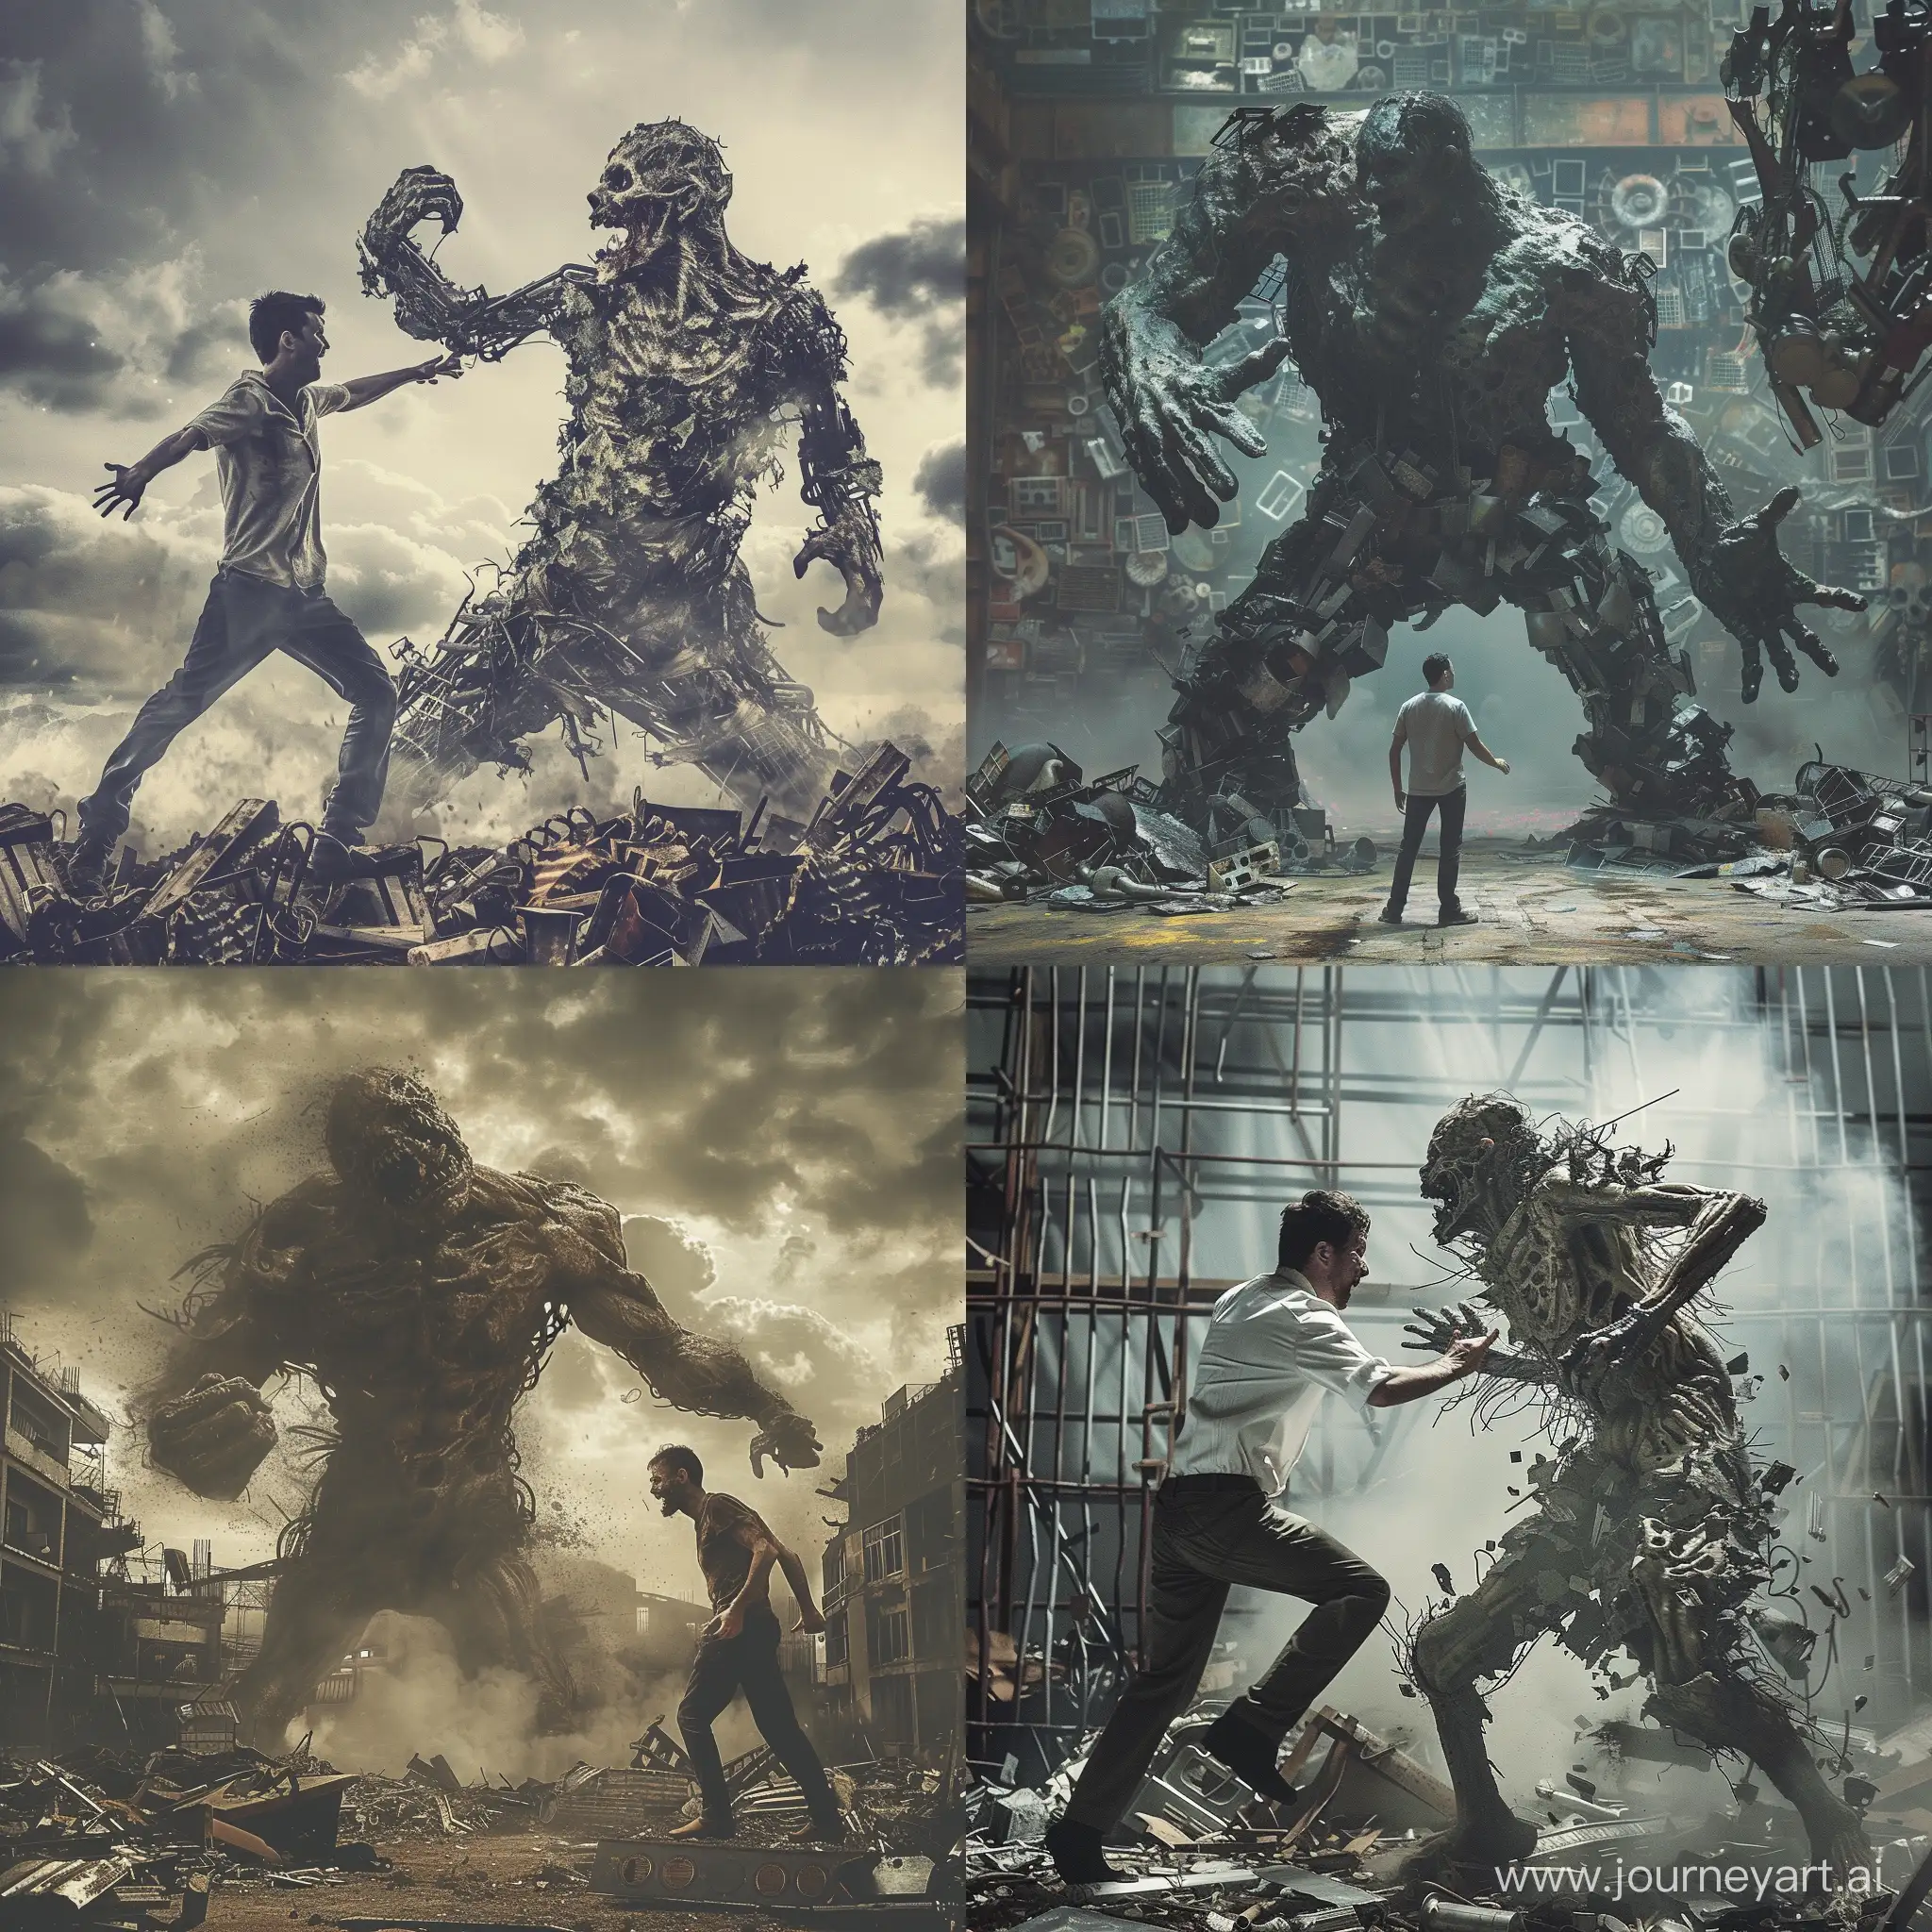 Intense-Battle-Man-Confronts-Zombie-in-Scrap-Metal-Arena